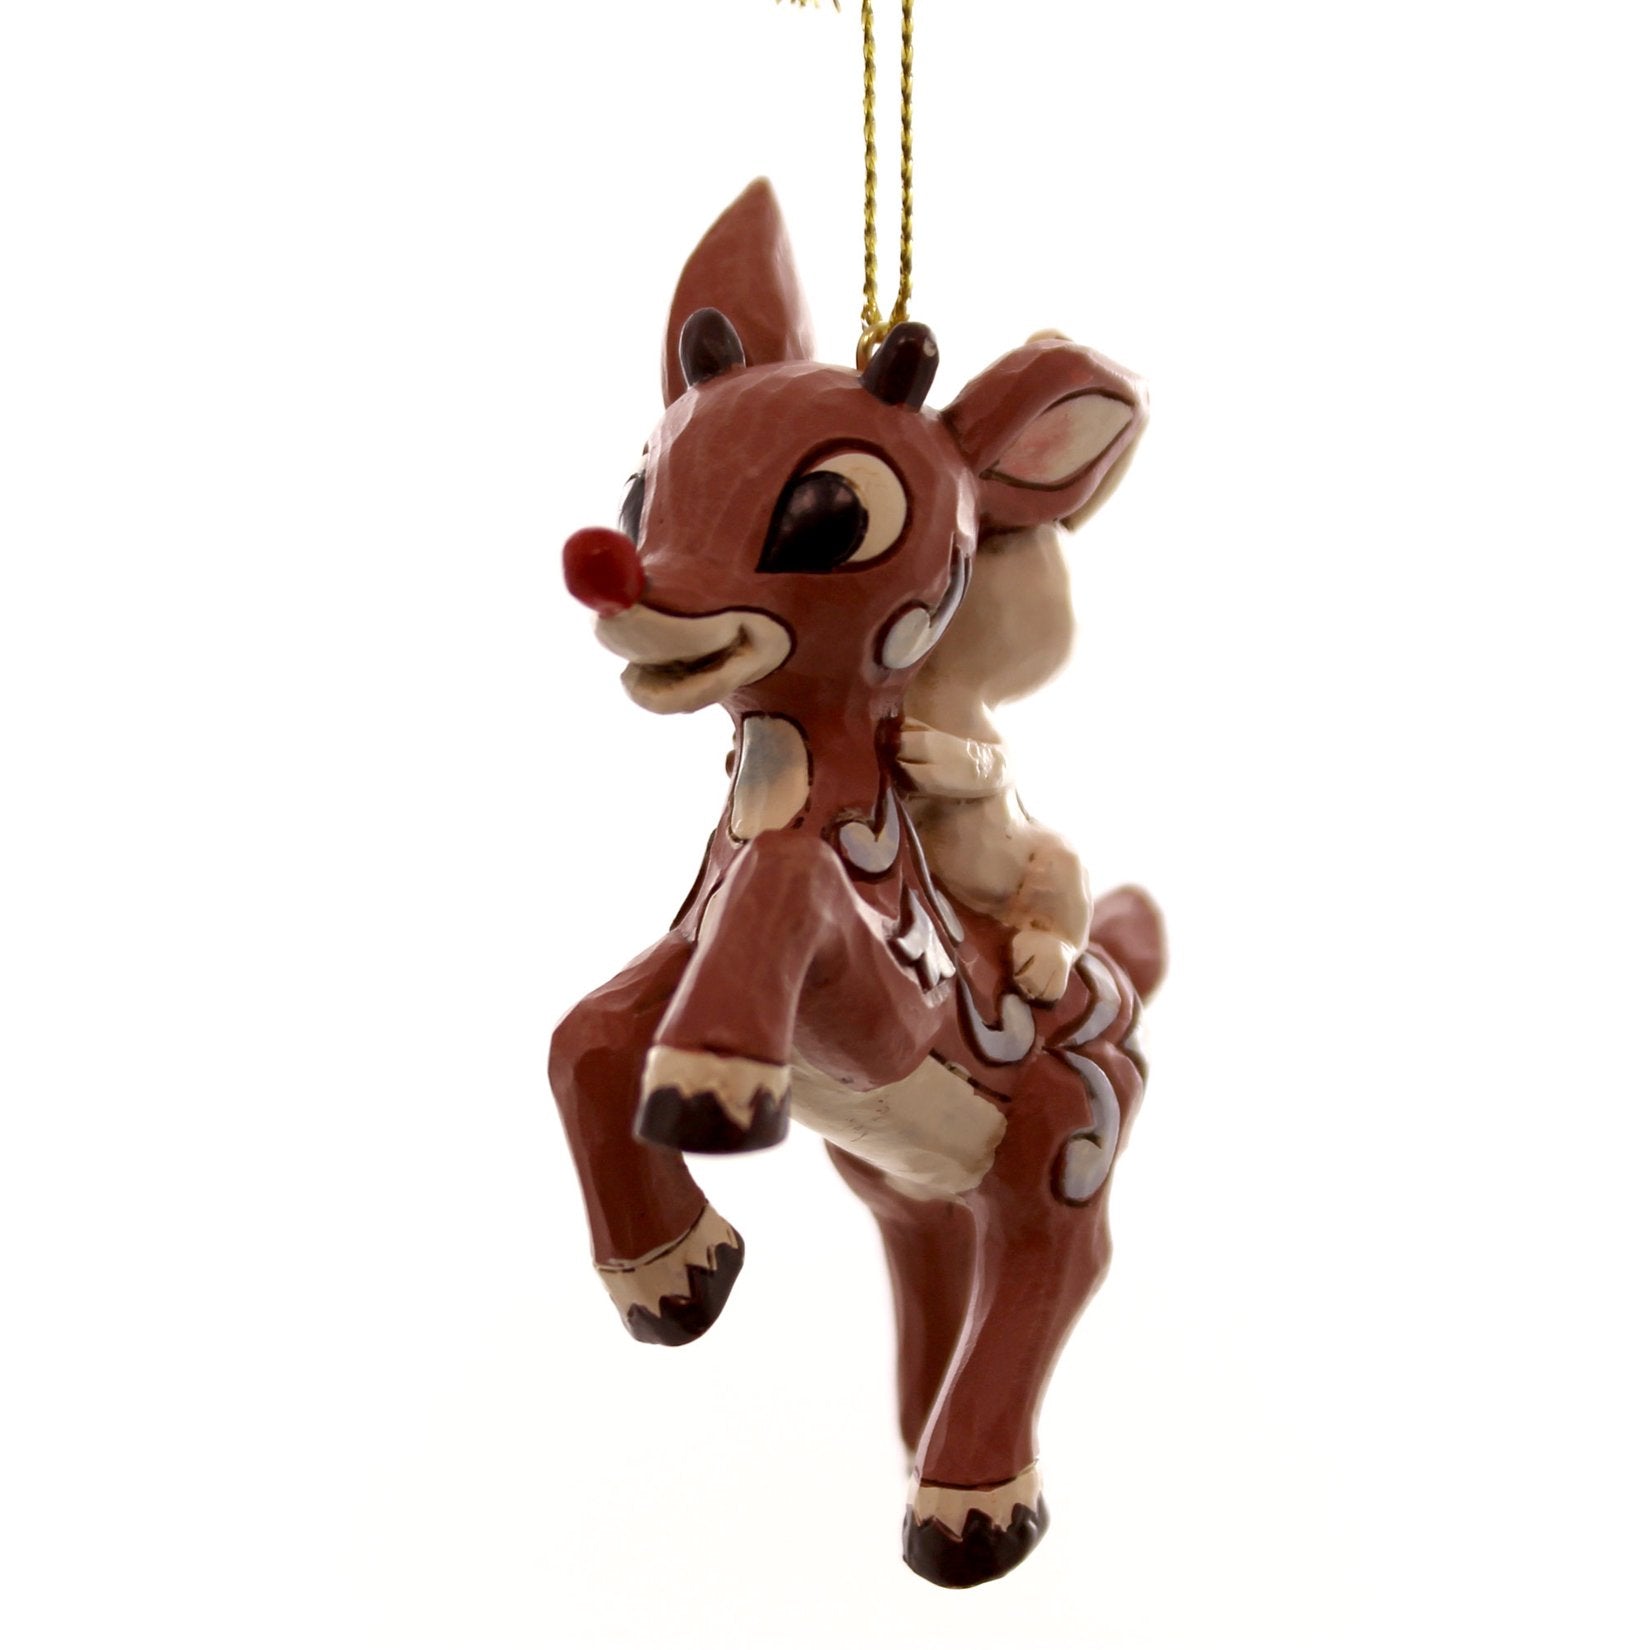 Jim Shore for Enesco Rudolph Carrying Bunny Ornament, 2"